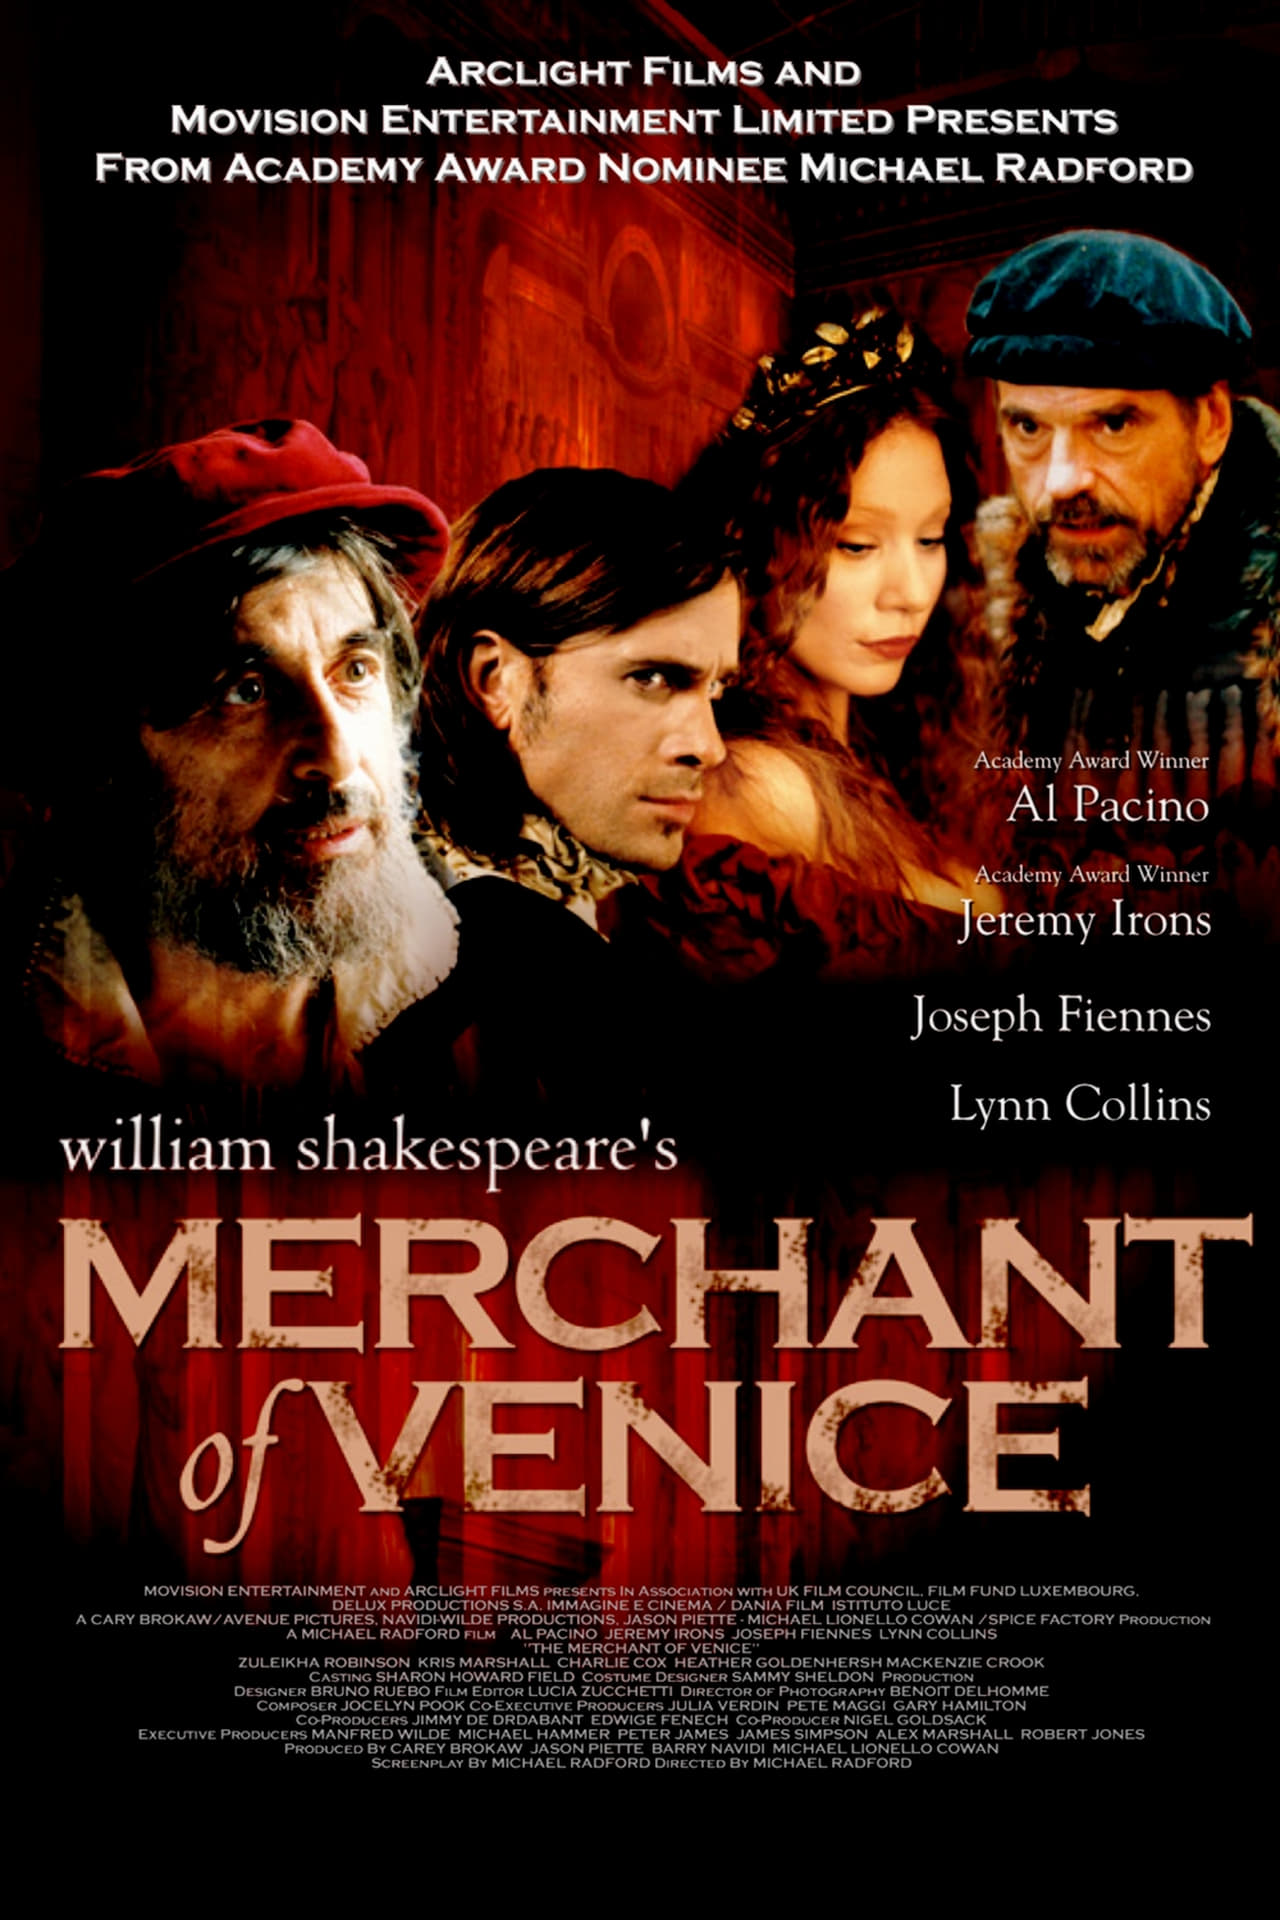 EN - The Merchant Of Venice (2004) AL PACINO